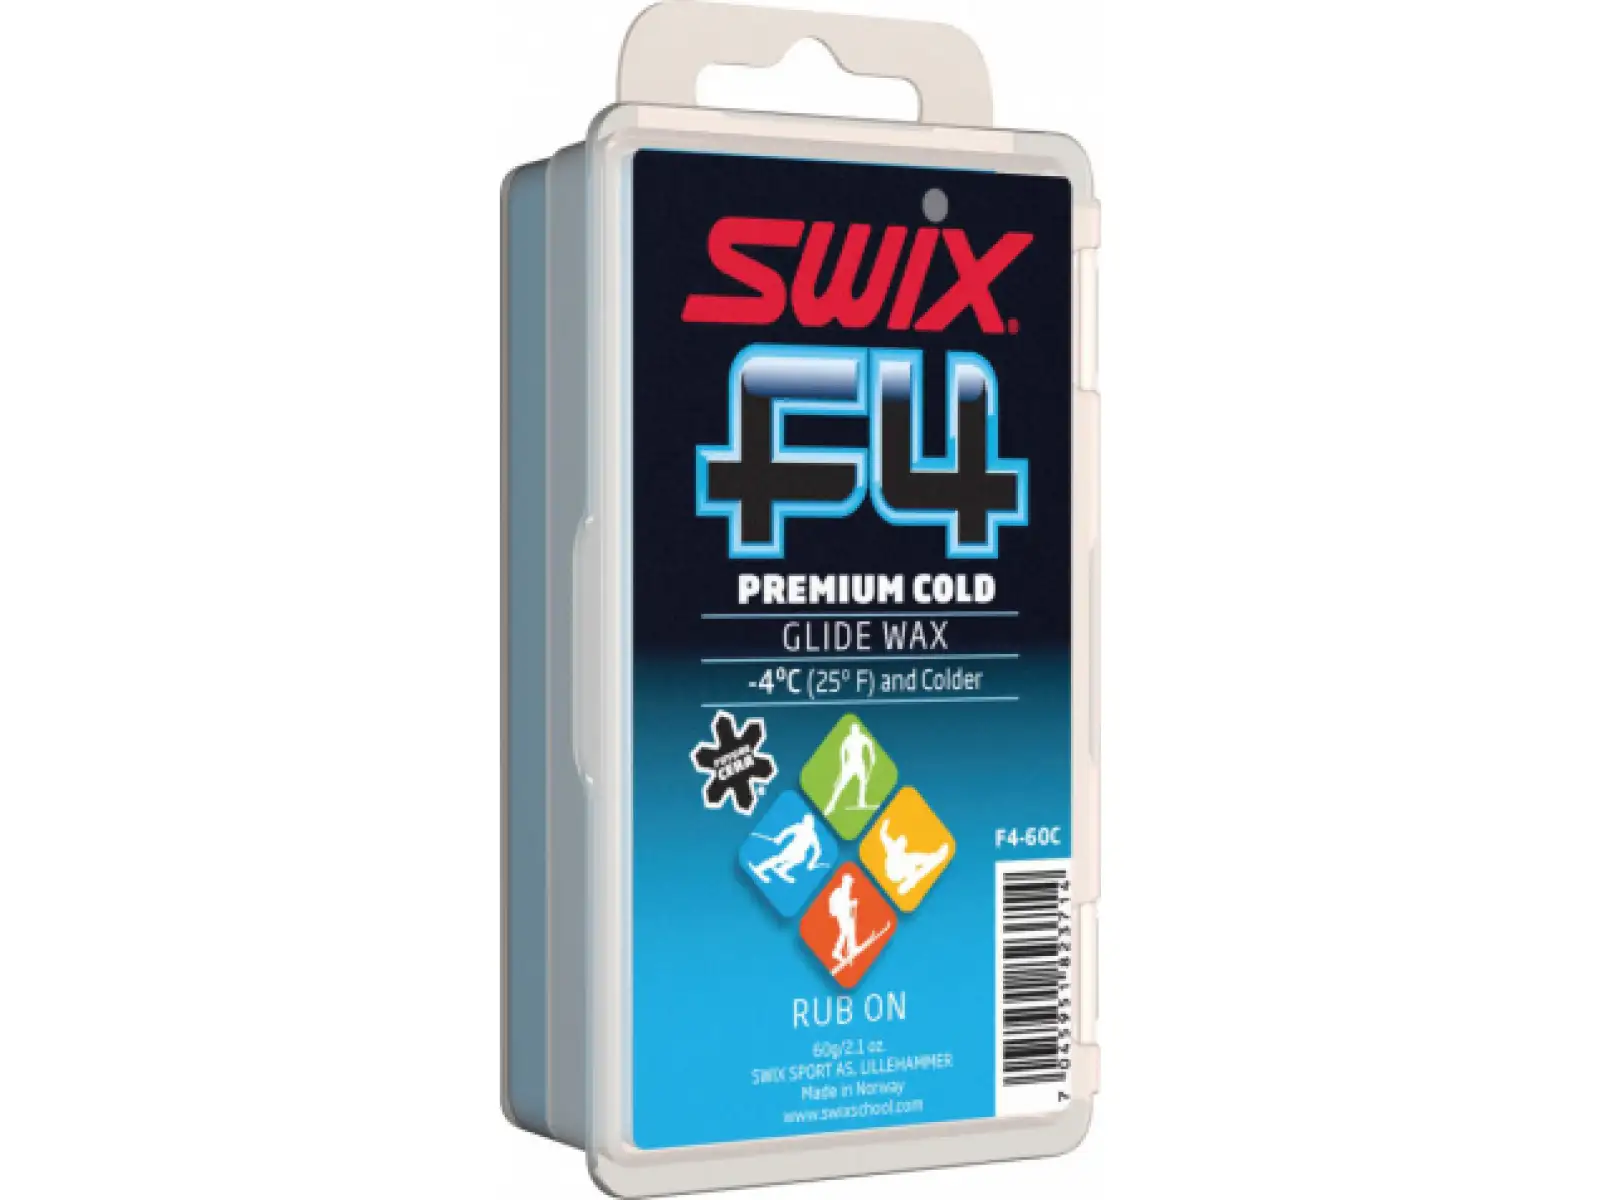 Swix F4 skluzný vosk premium cold 60 g